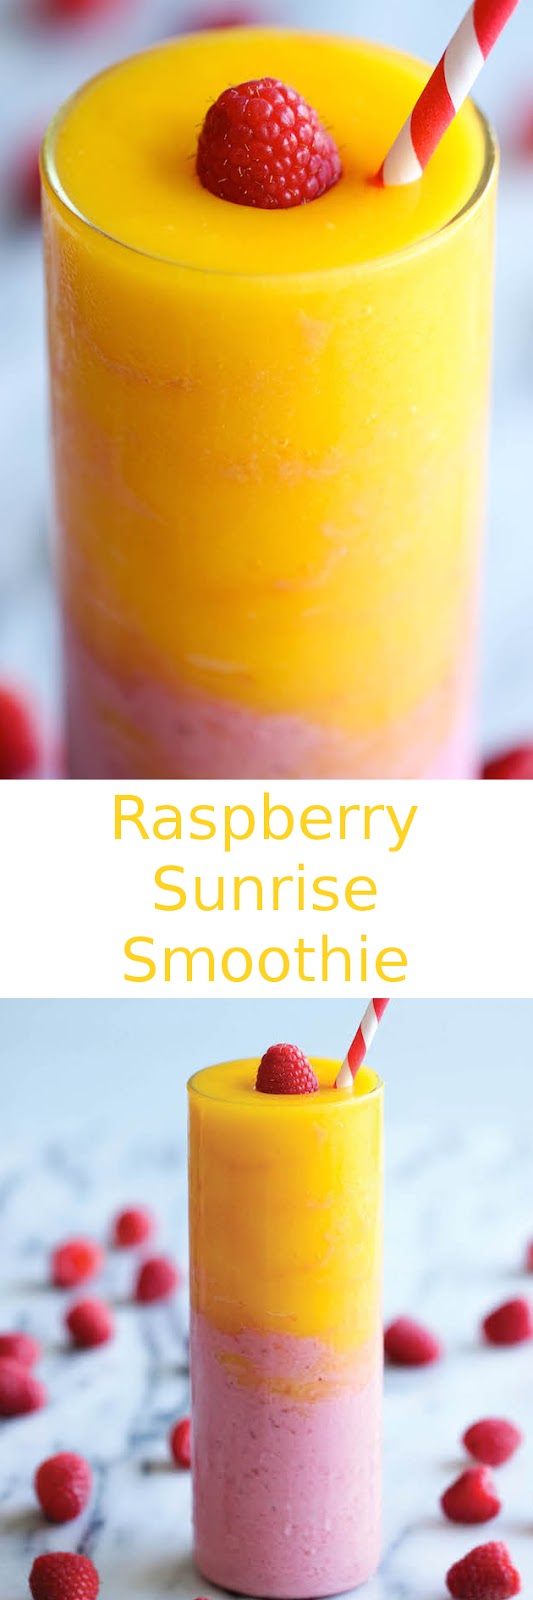 Raspberry Sunrise Smoothie